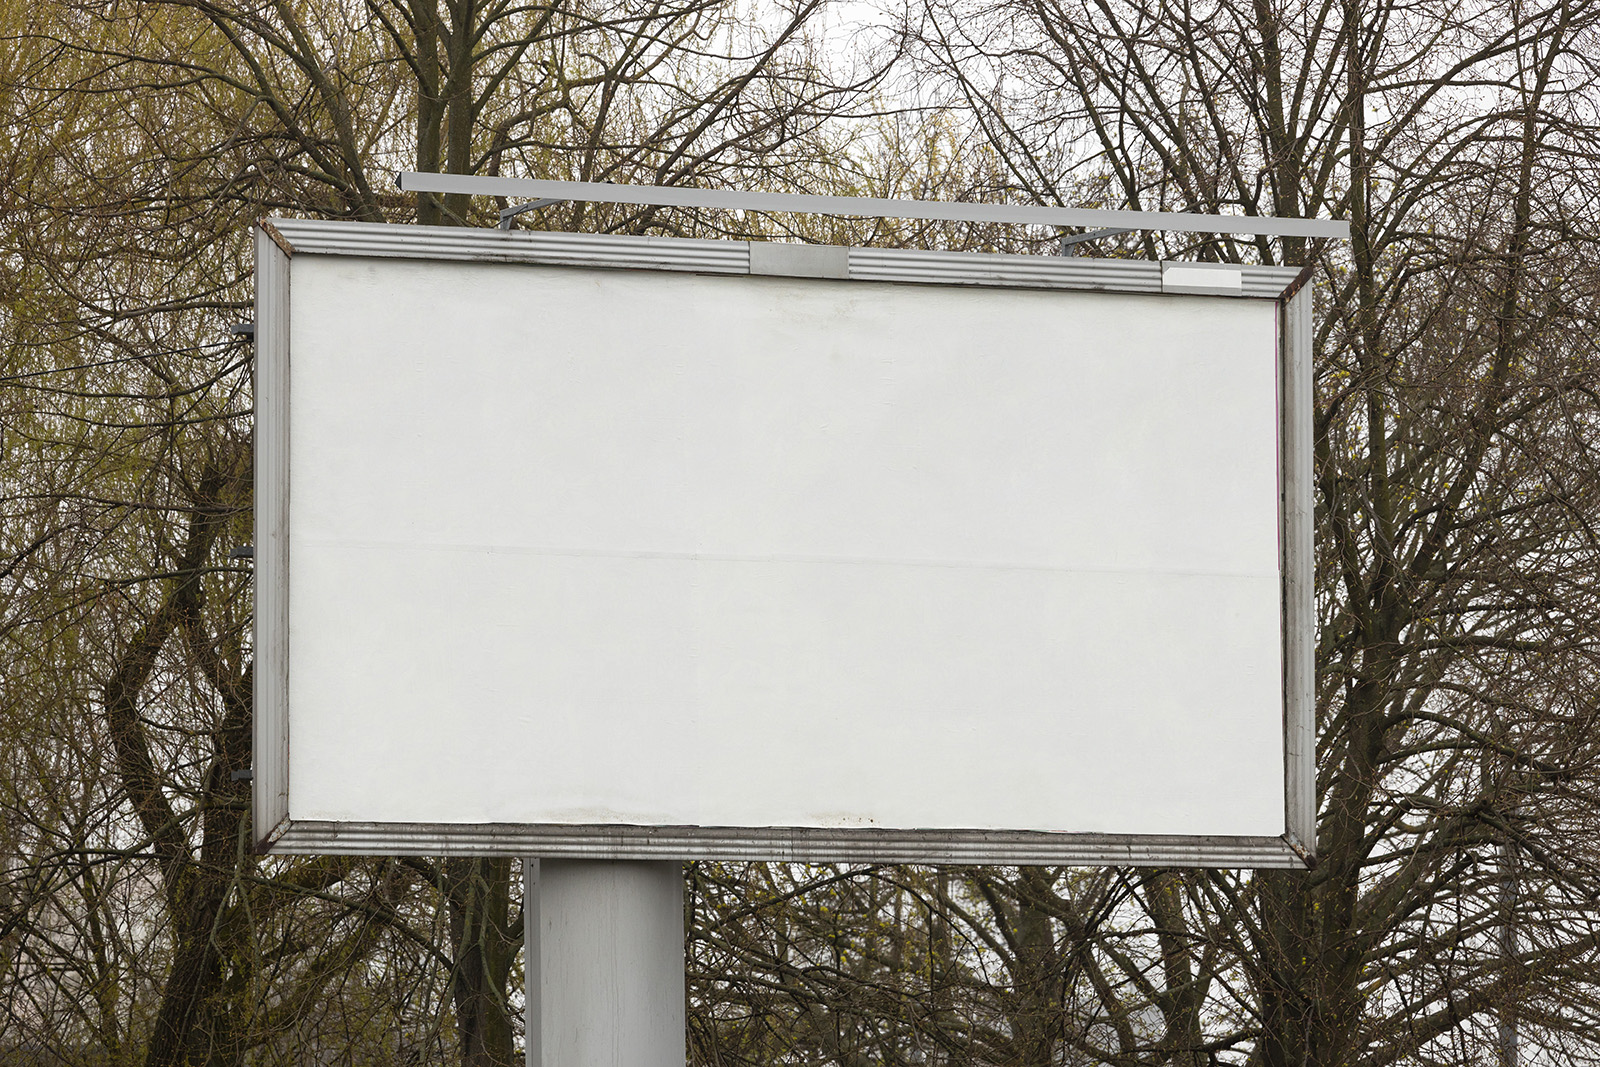 Early spring billboard mockup